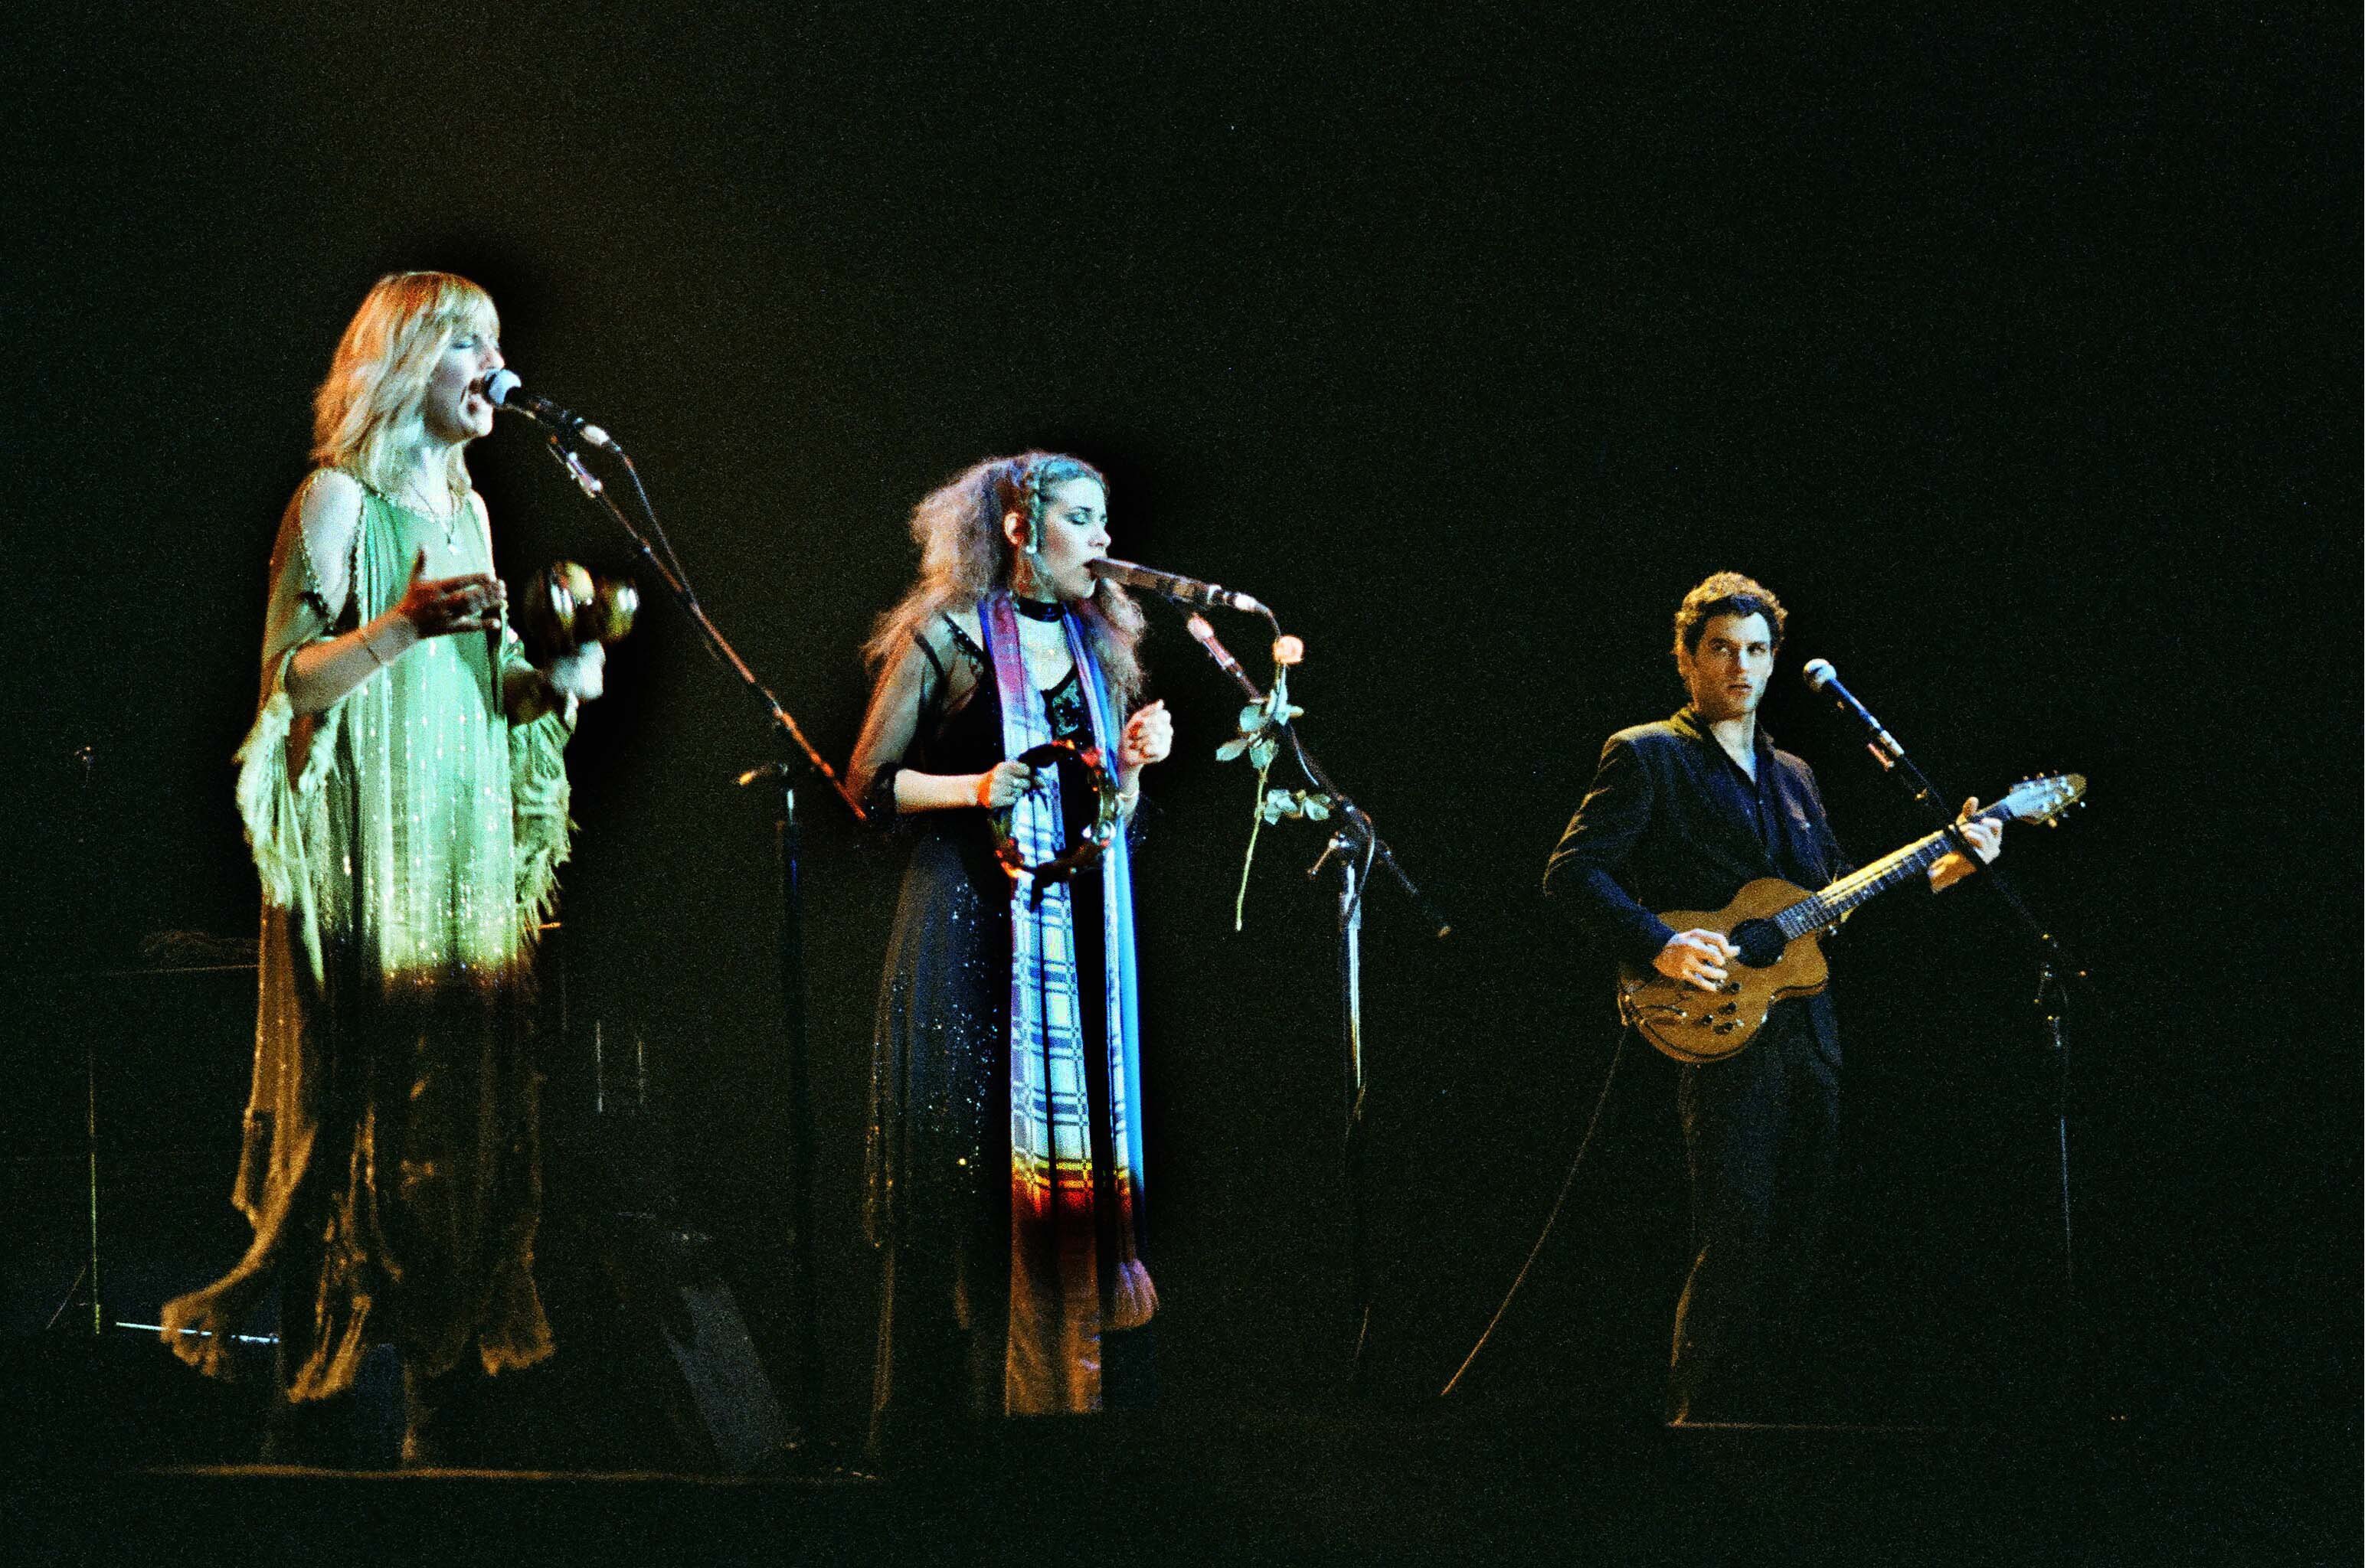 Christine McVie, Stevie Nicks, and Lindsey Buckingham of Fleetwood Mac performing live on stage